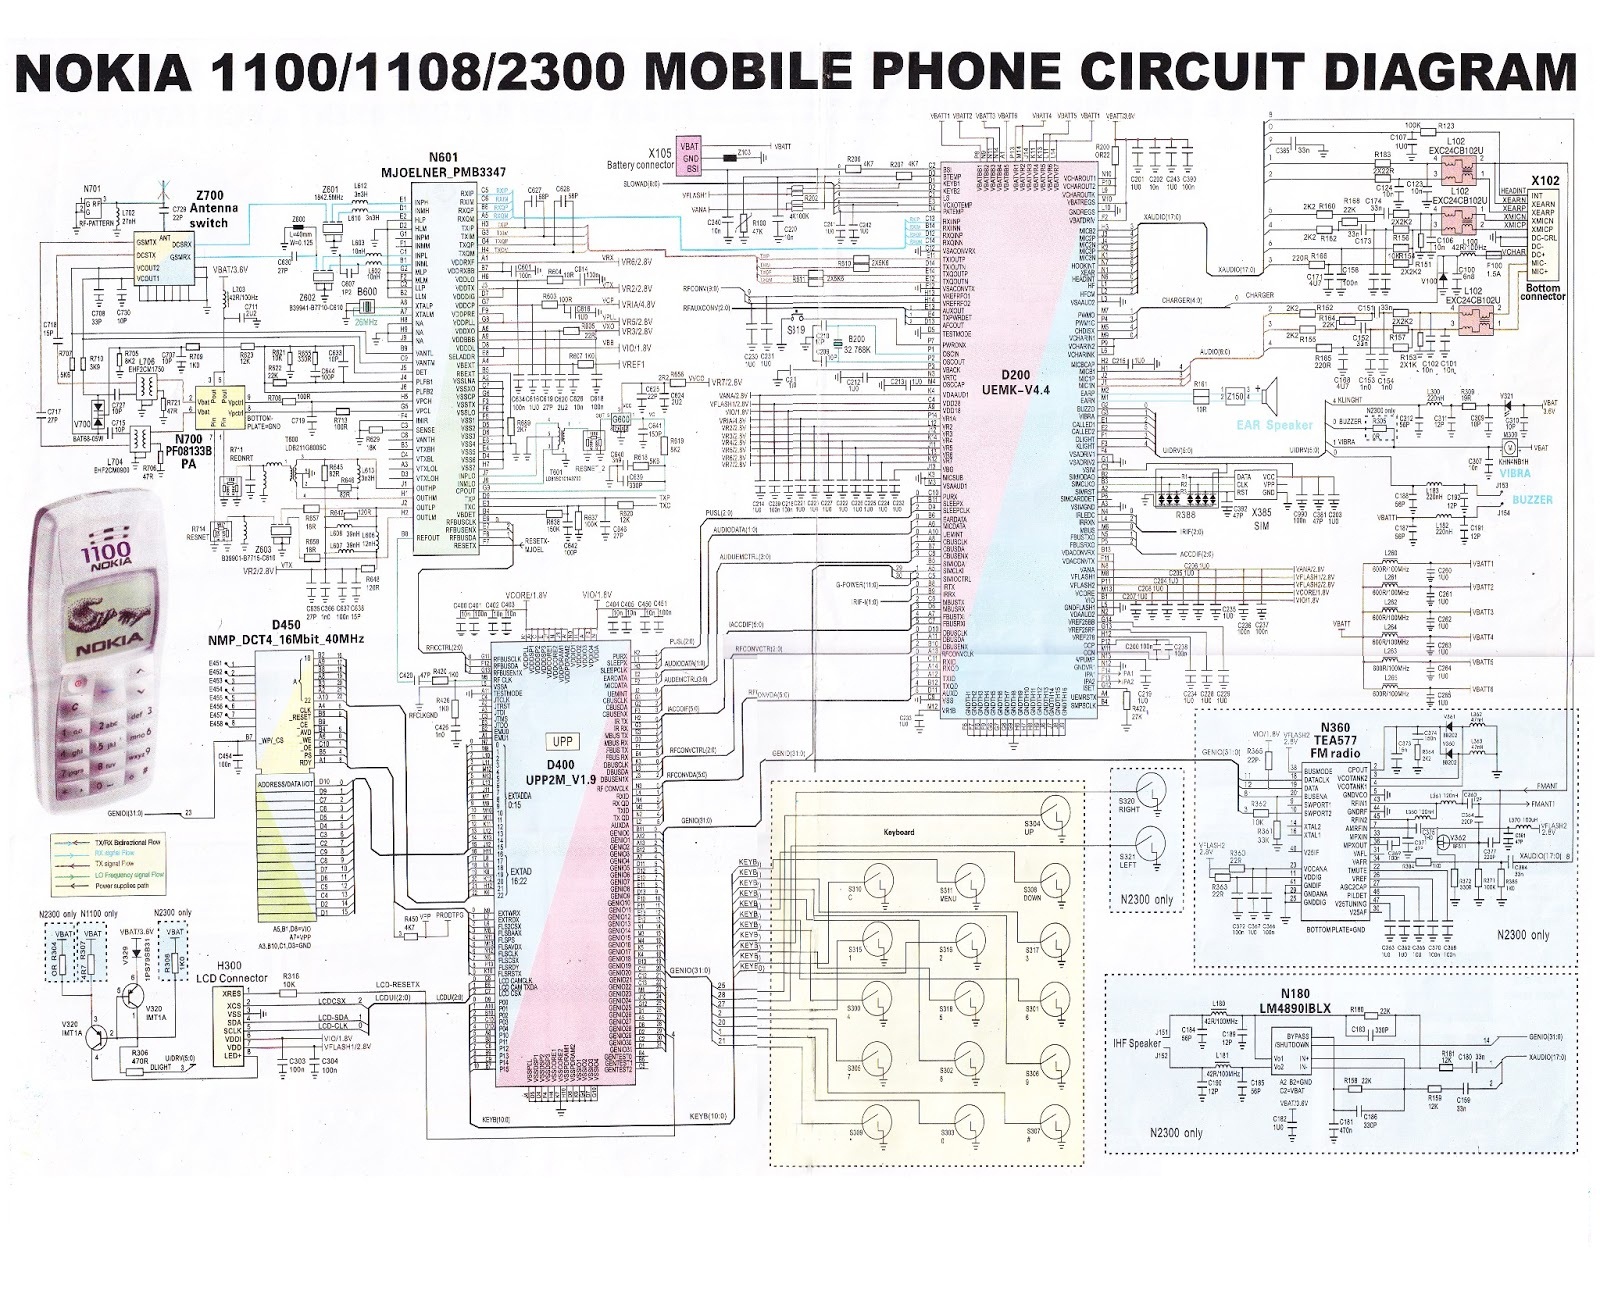 Nokia 1100 Circuit Diagram Pdf